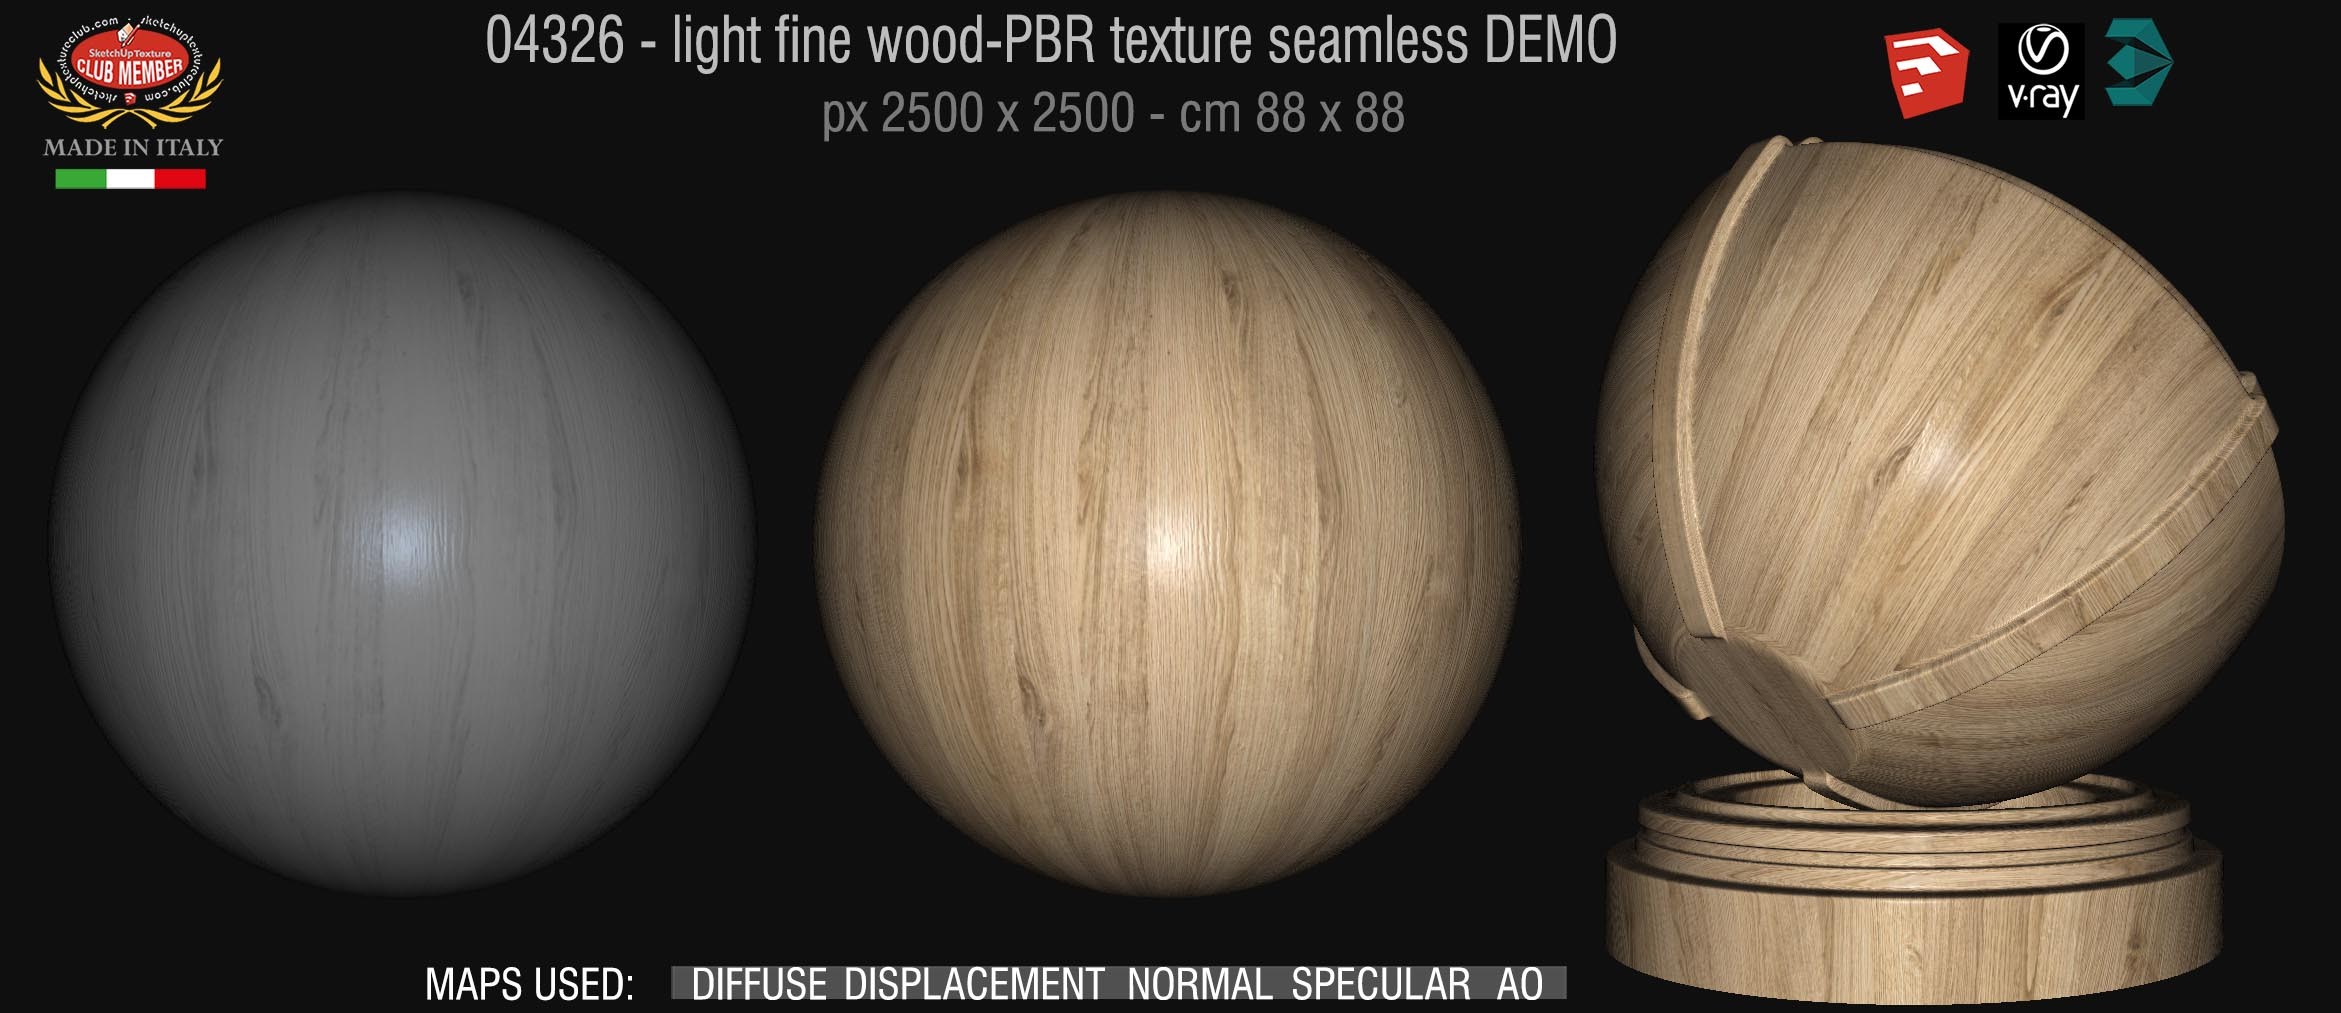 04326 light fine wood-PBR texture seamless DEMO